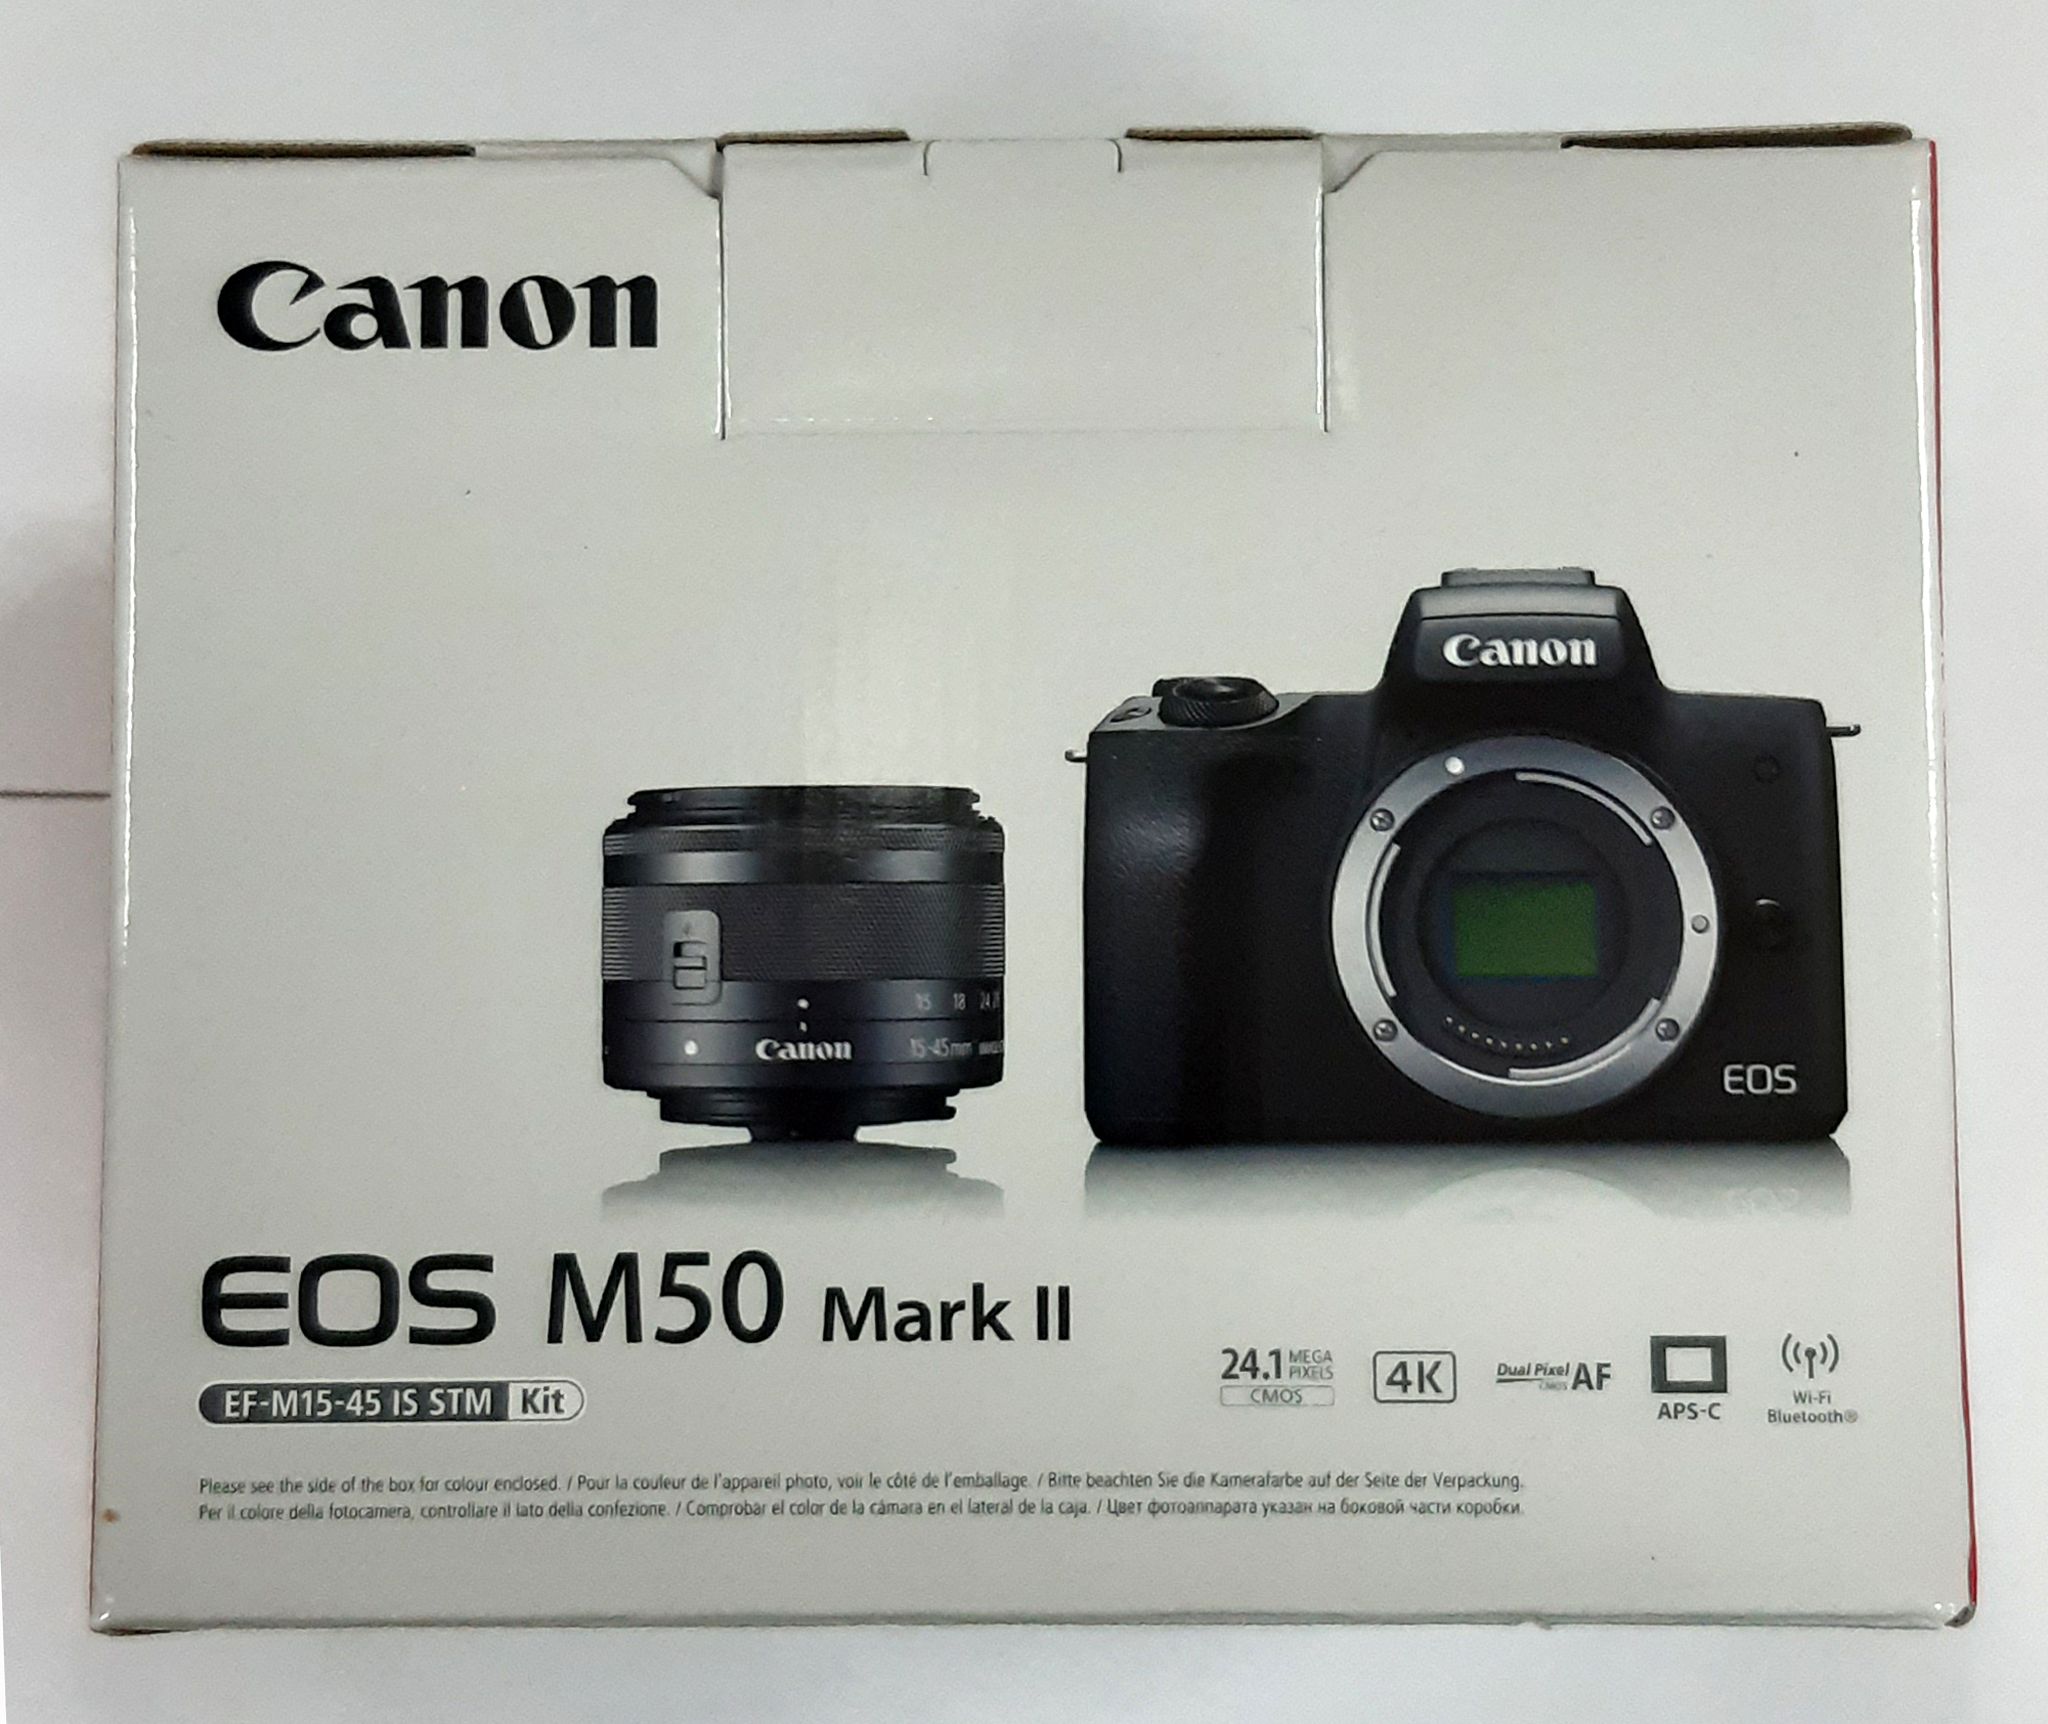 Eos m50 mark ii kit. Canon m50 Mark II Kit. Canon EOS m50 Mark II Kit 15-45mm is STM.